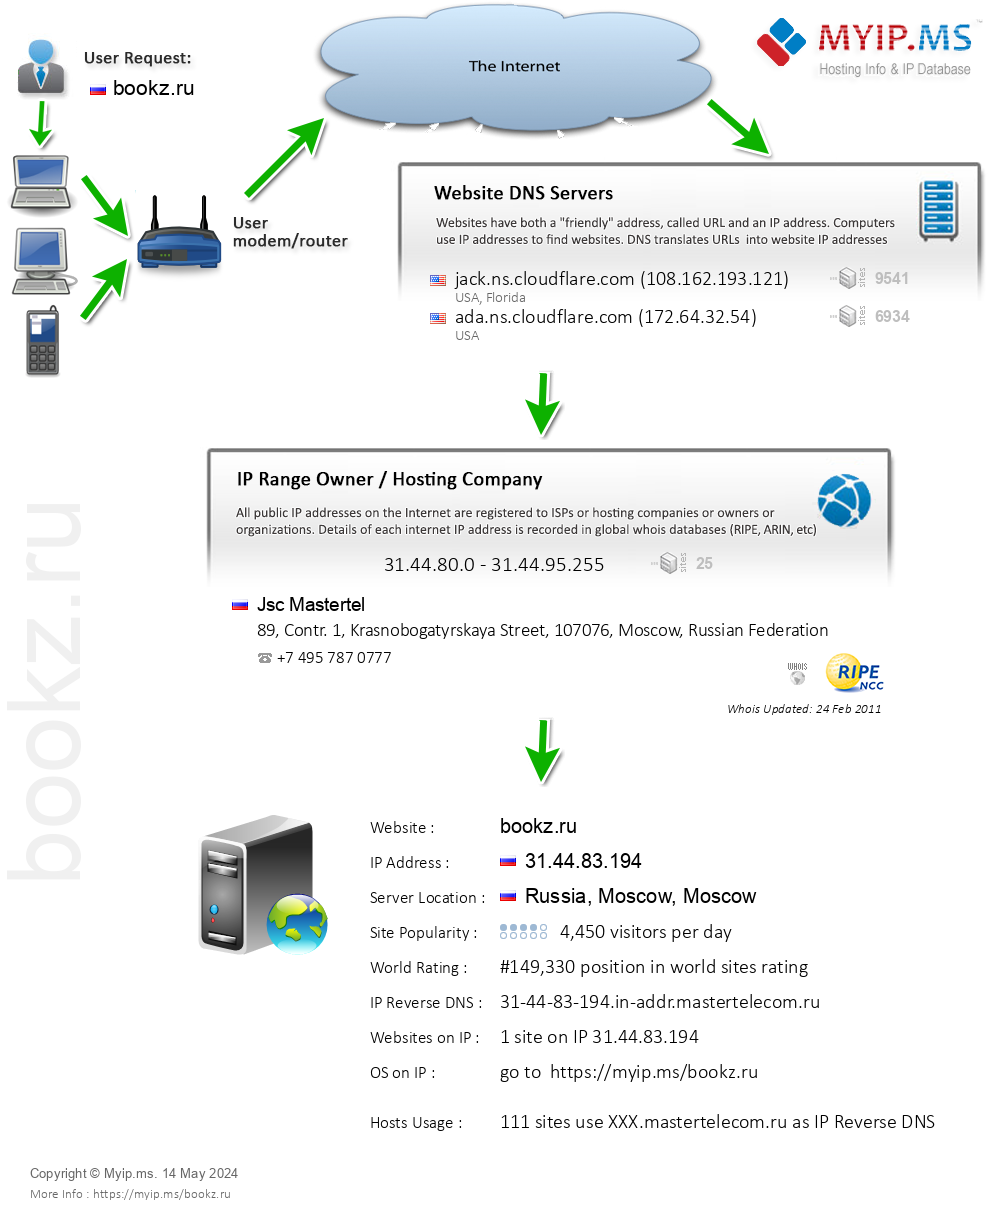 Bookz.ru - Website Hosting Visual IP Diagram